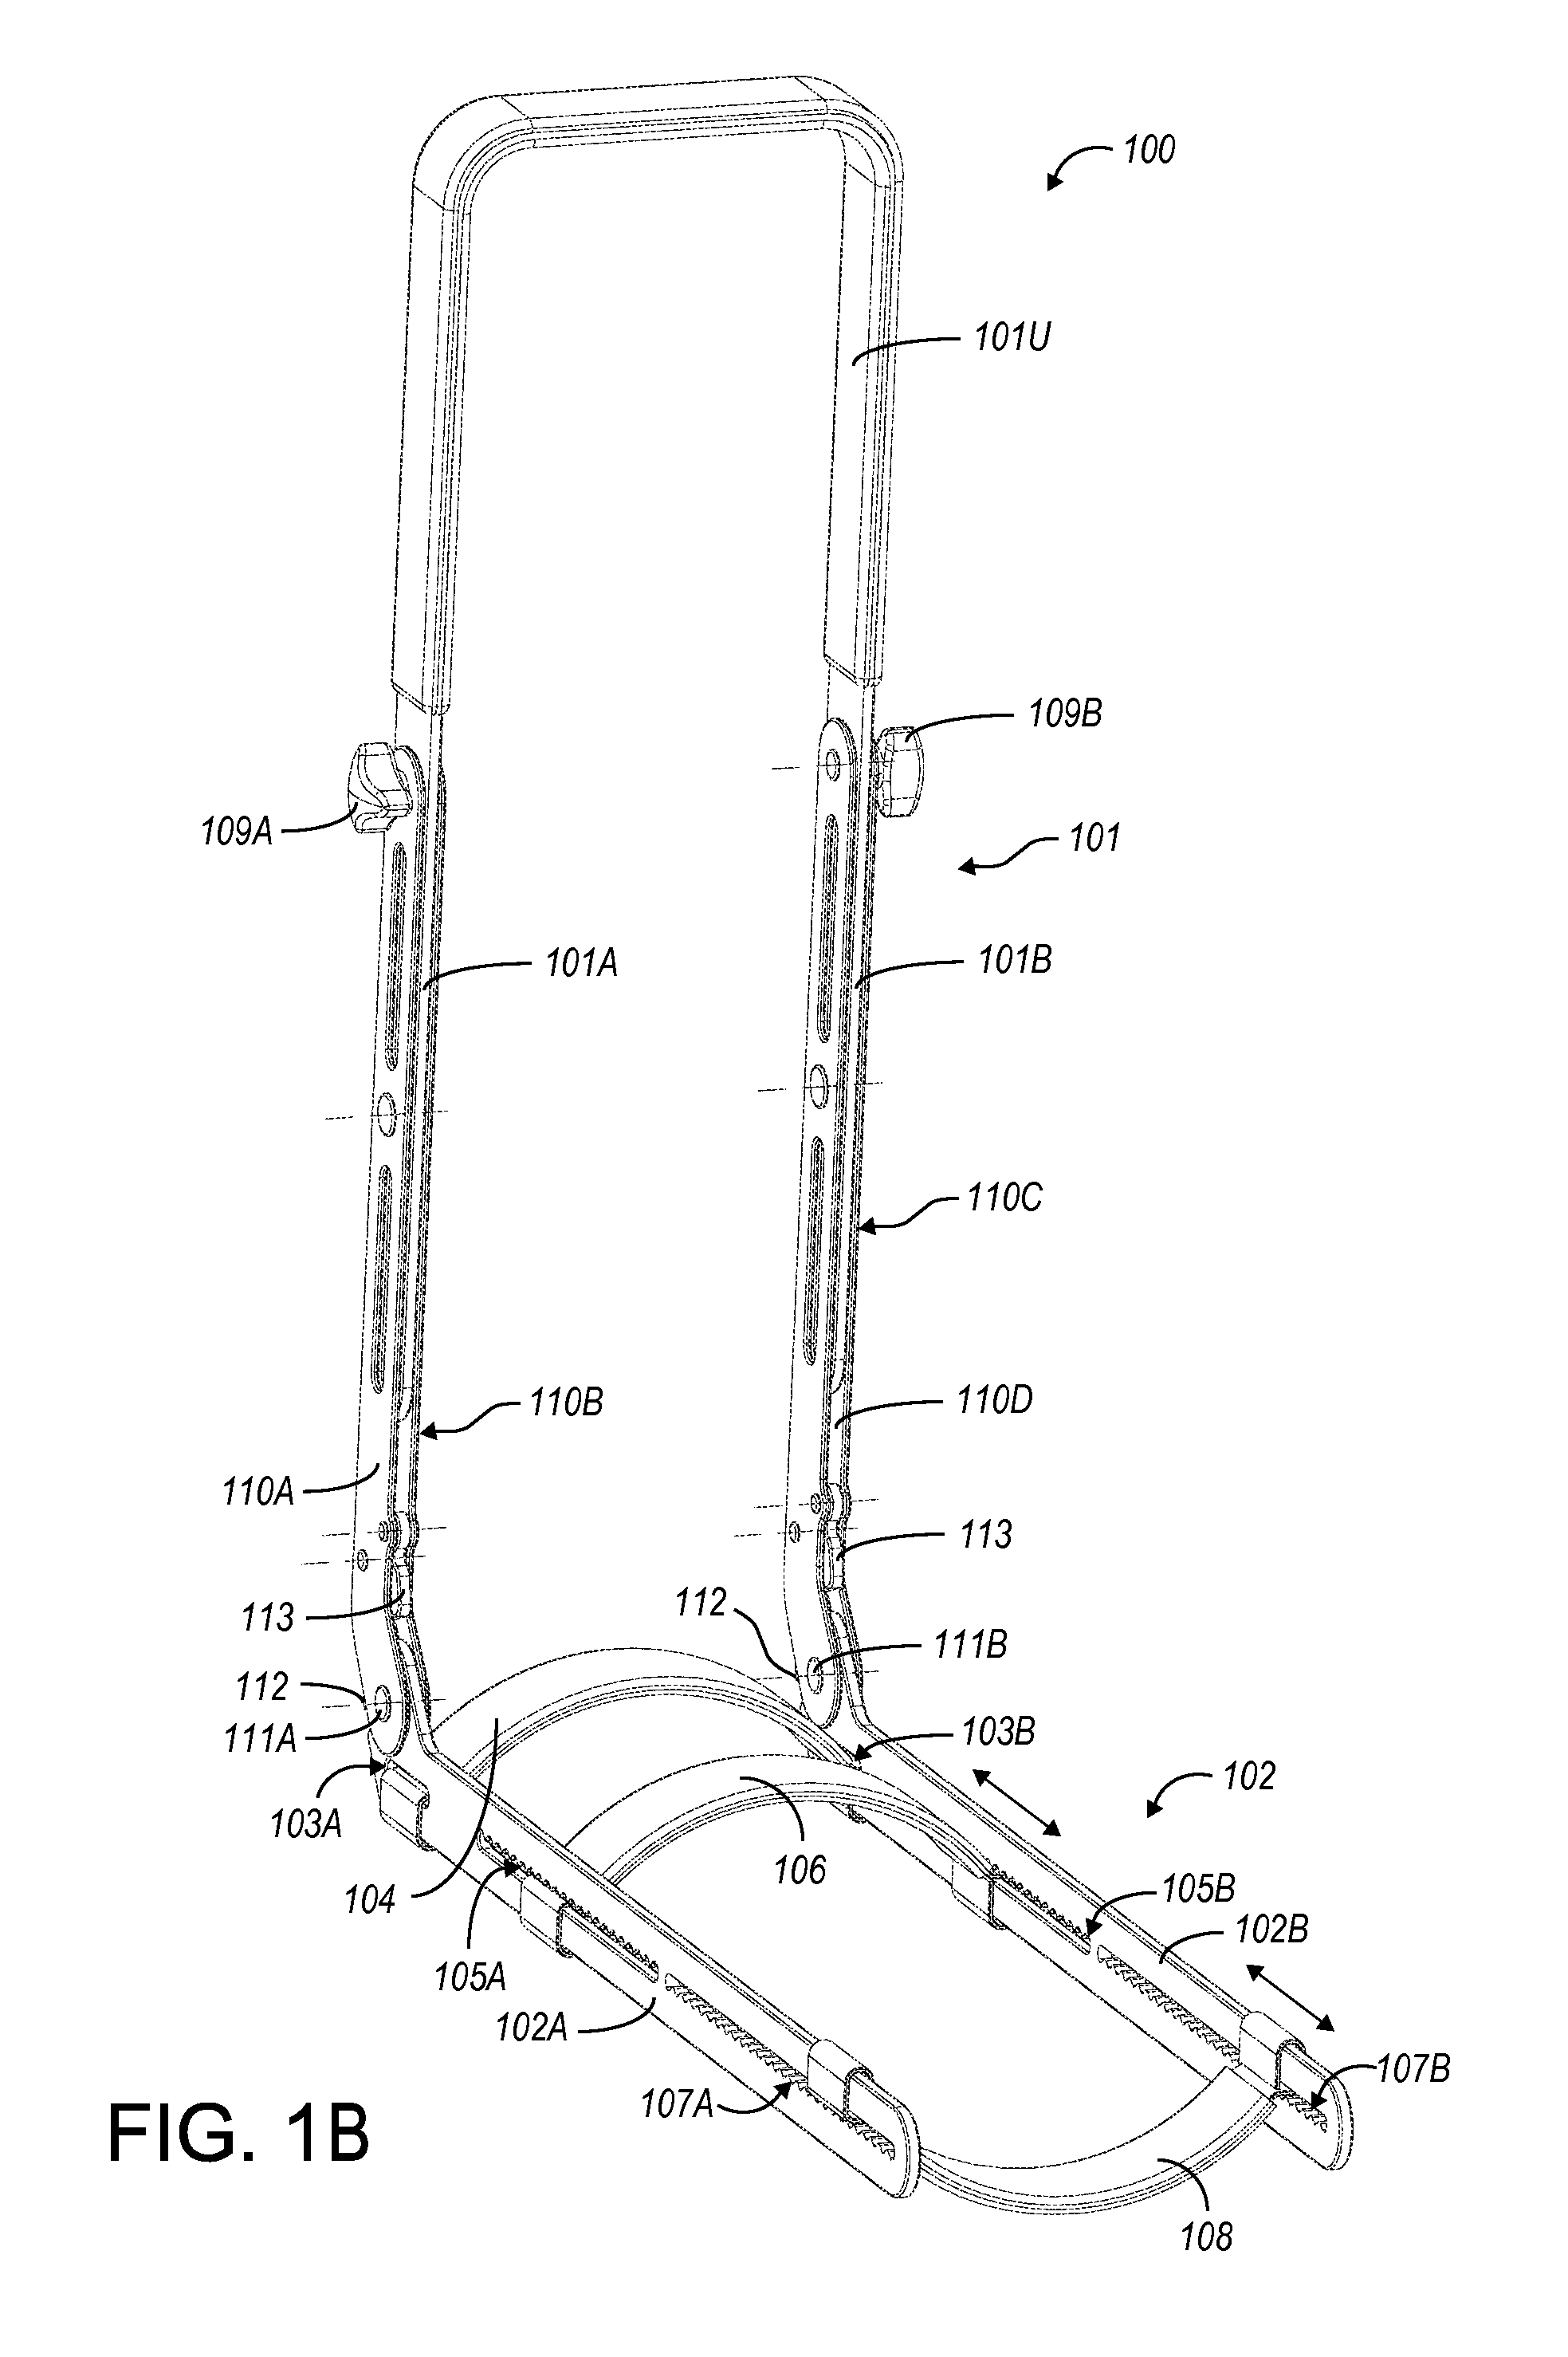 Knee rehabilitation device with measurement element